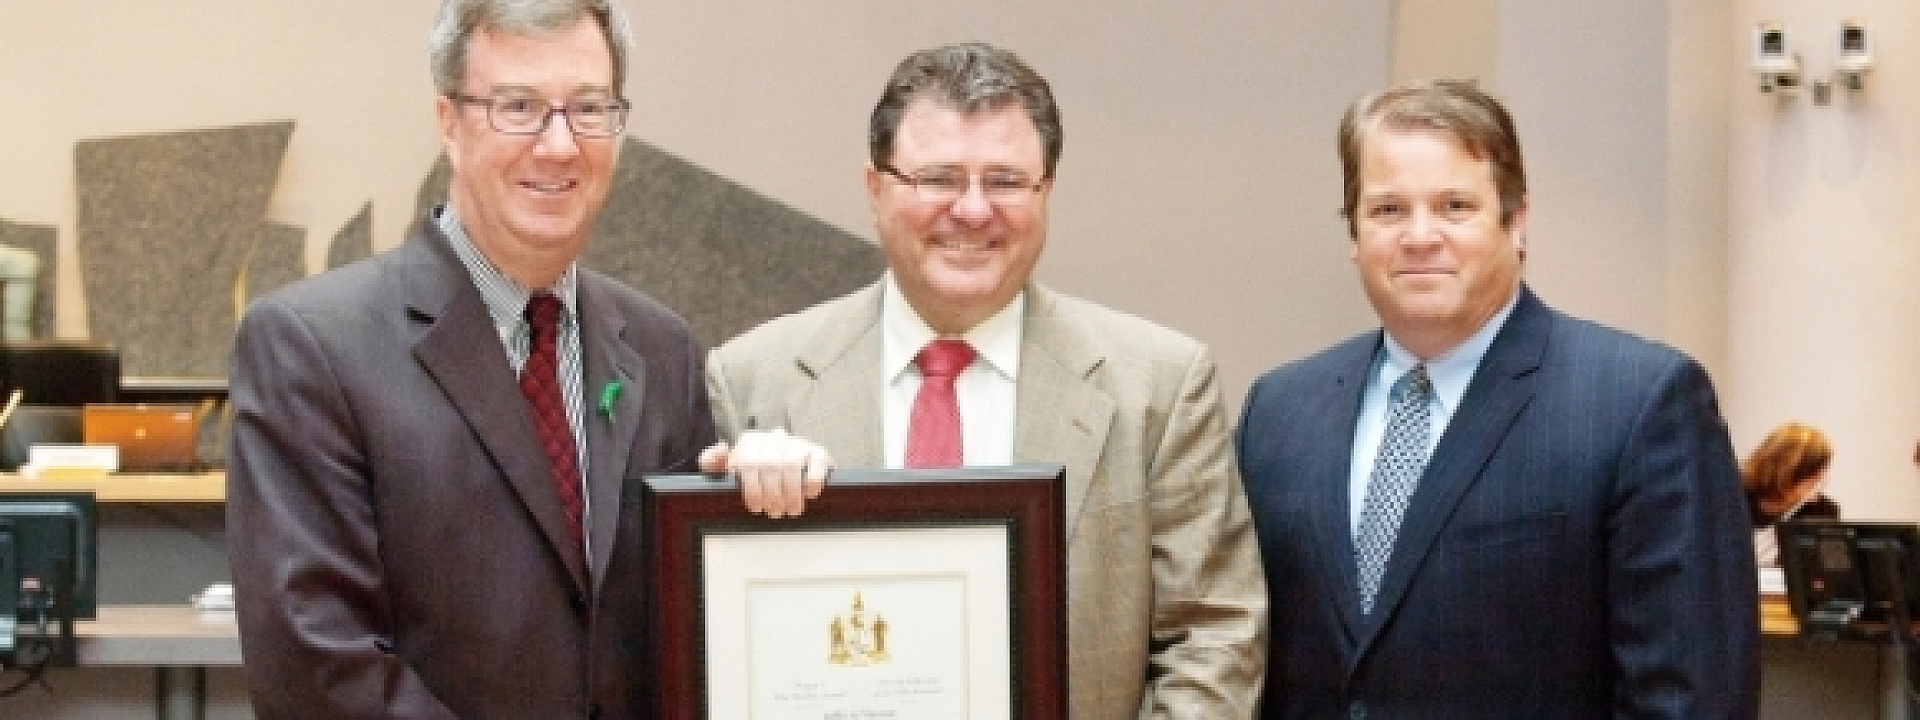 Gilles LeVasseur receives Mayor’s City Builder Award